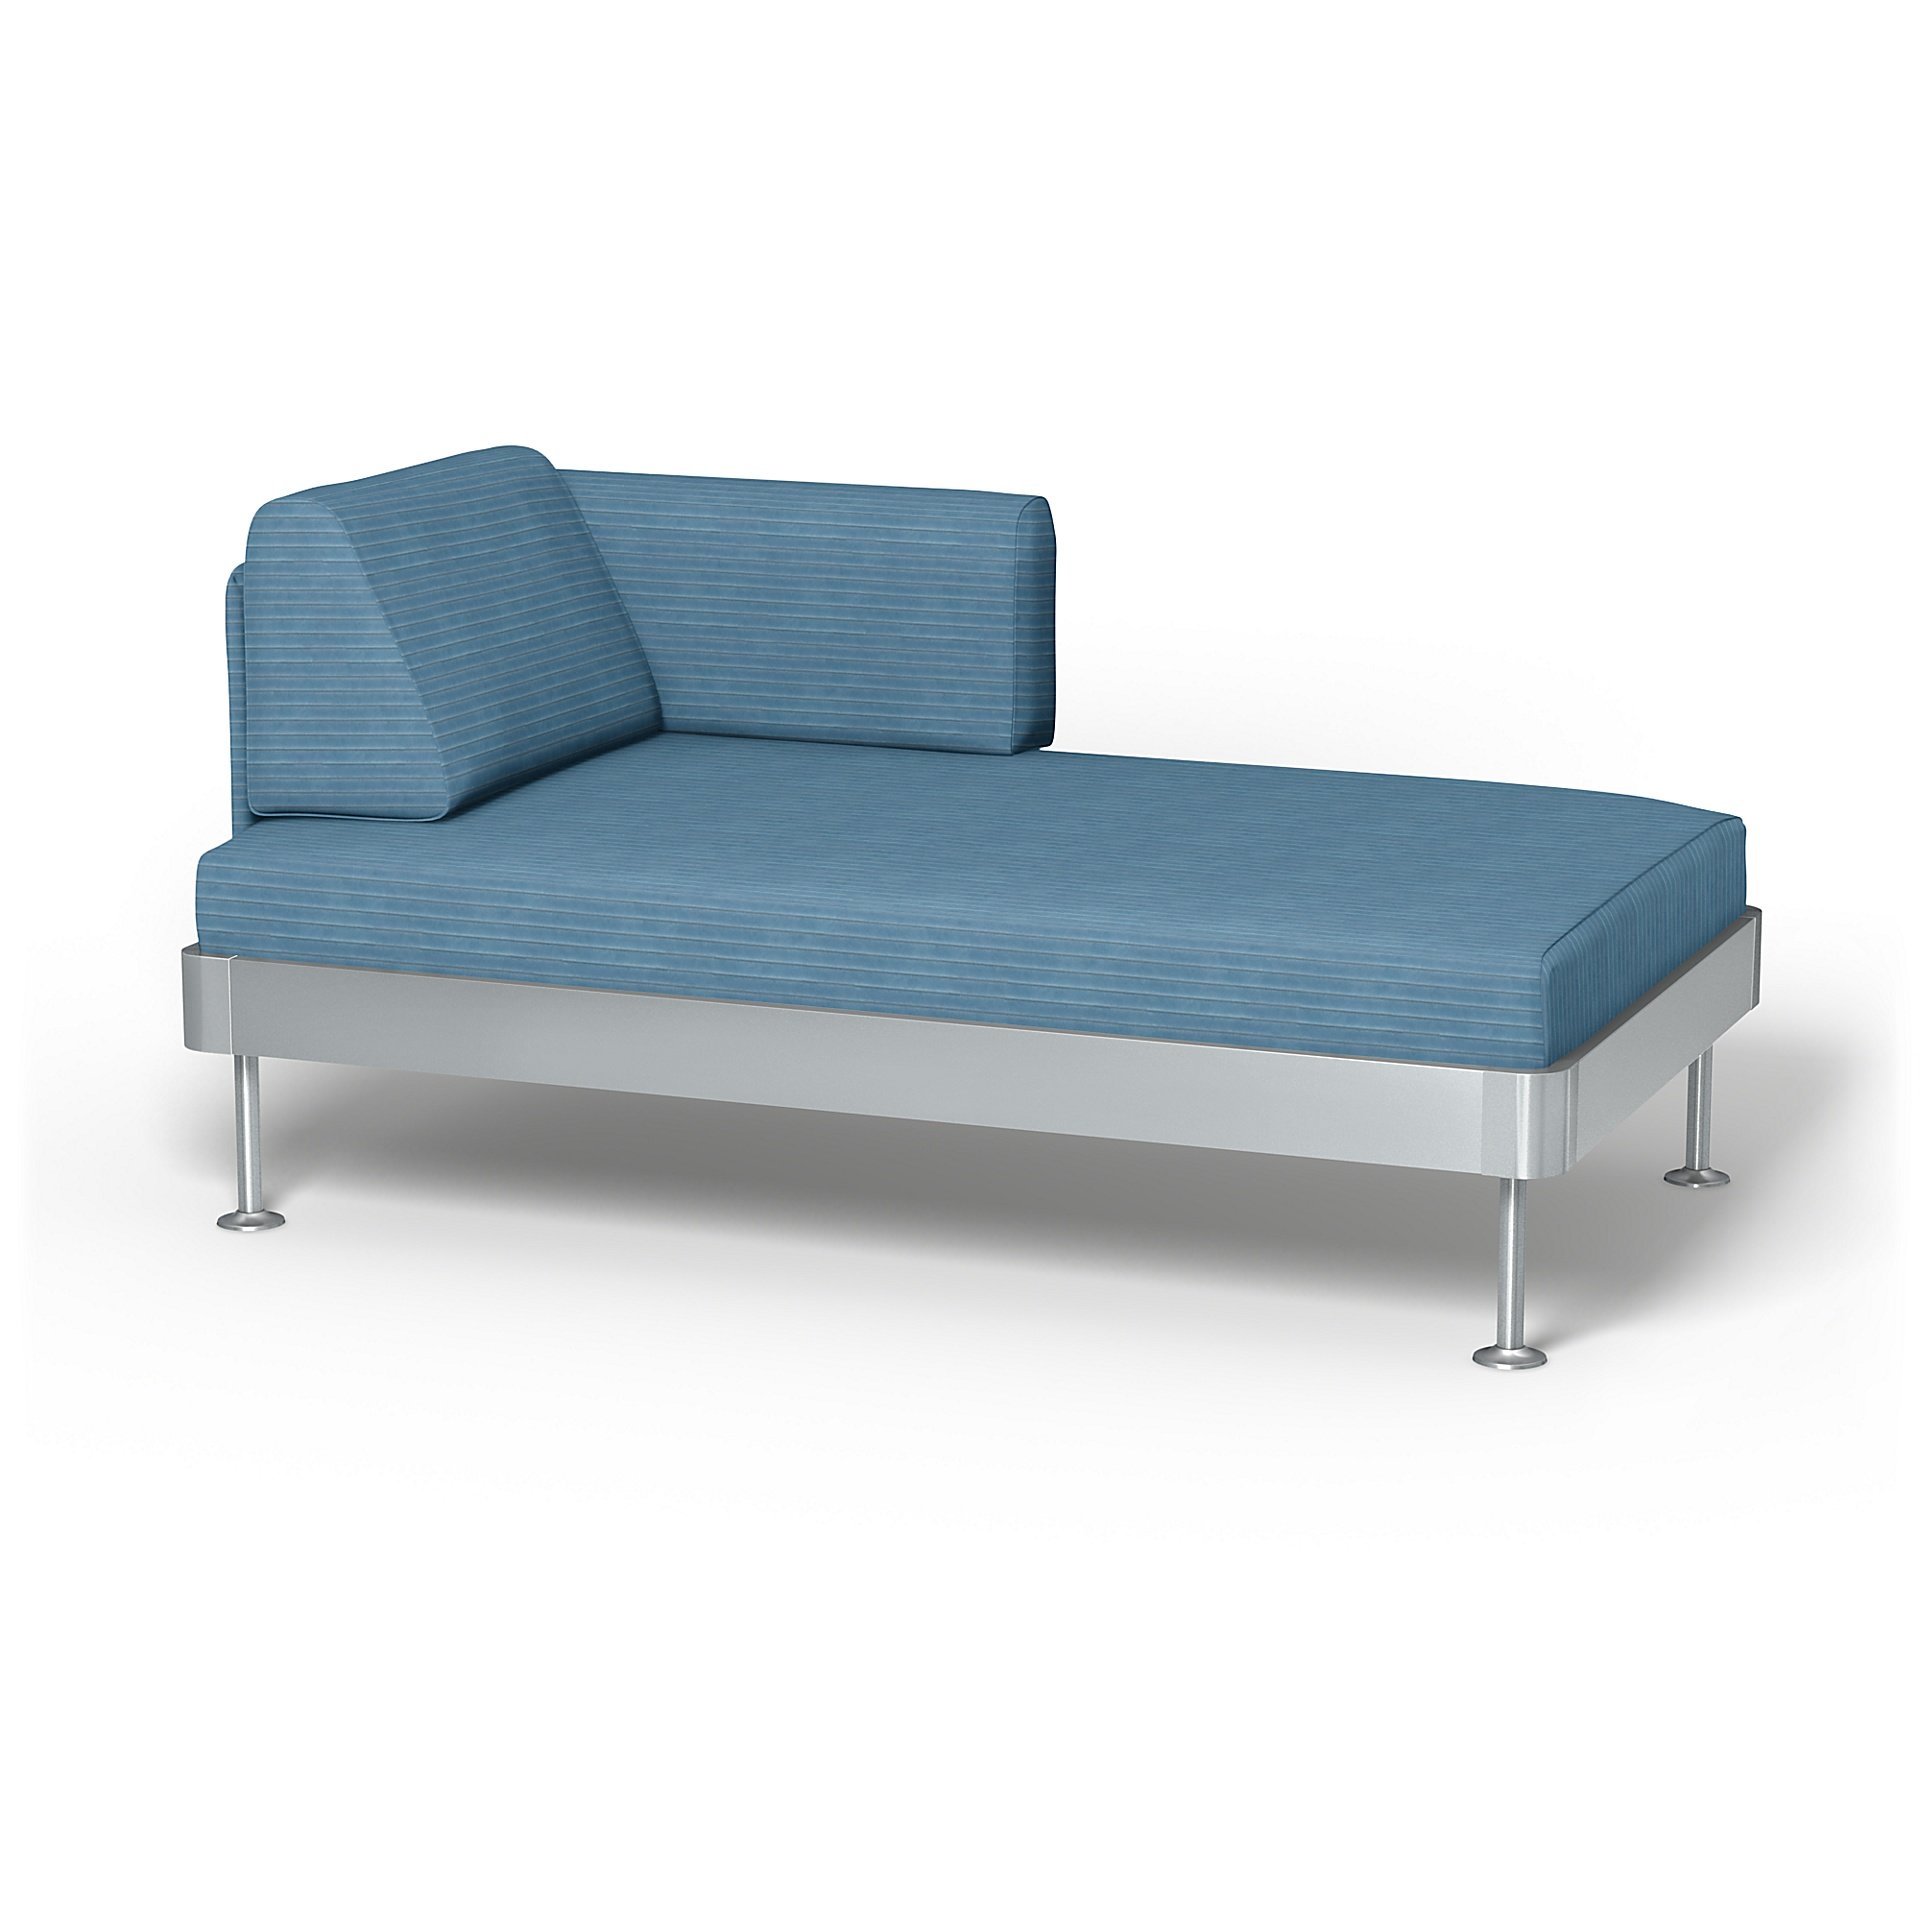 IKEA - Delaktig Chaise Longue Cover, Sky Blue, Corduroy - Bemz